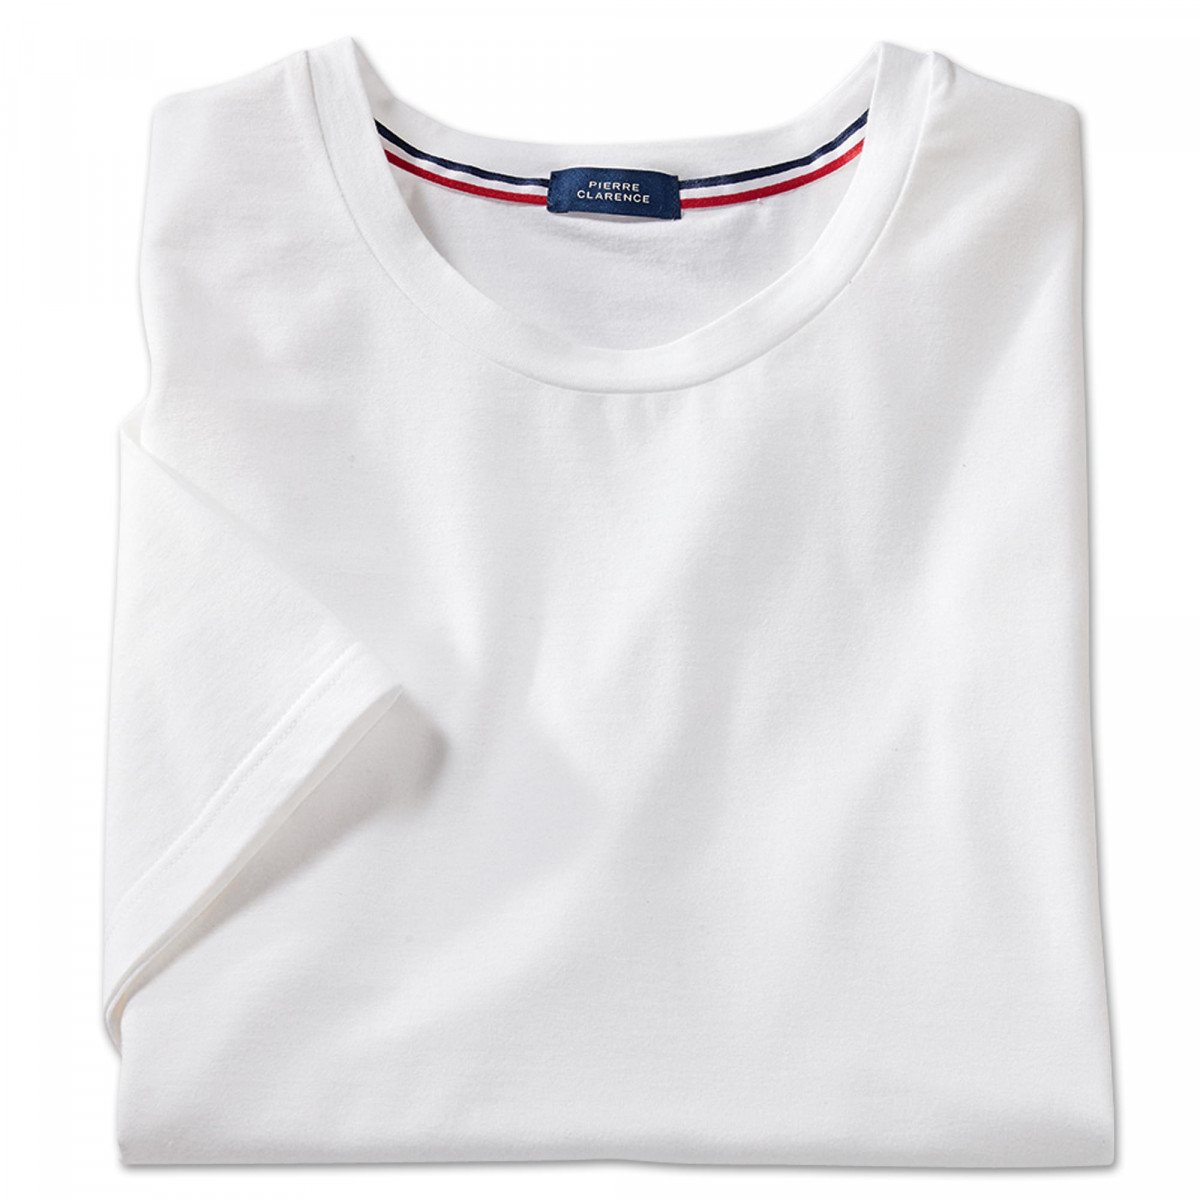 Tee-shirt coton 96/100 (M) Blanc